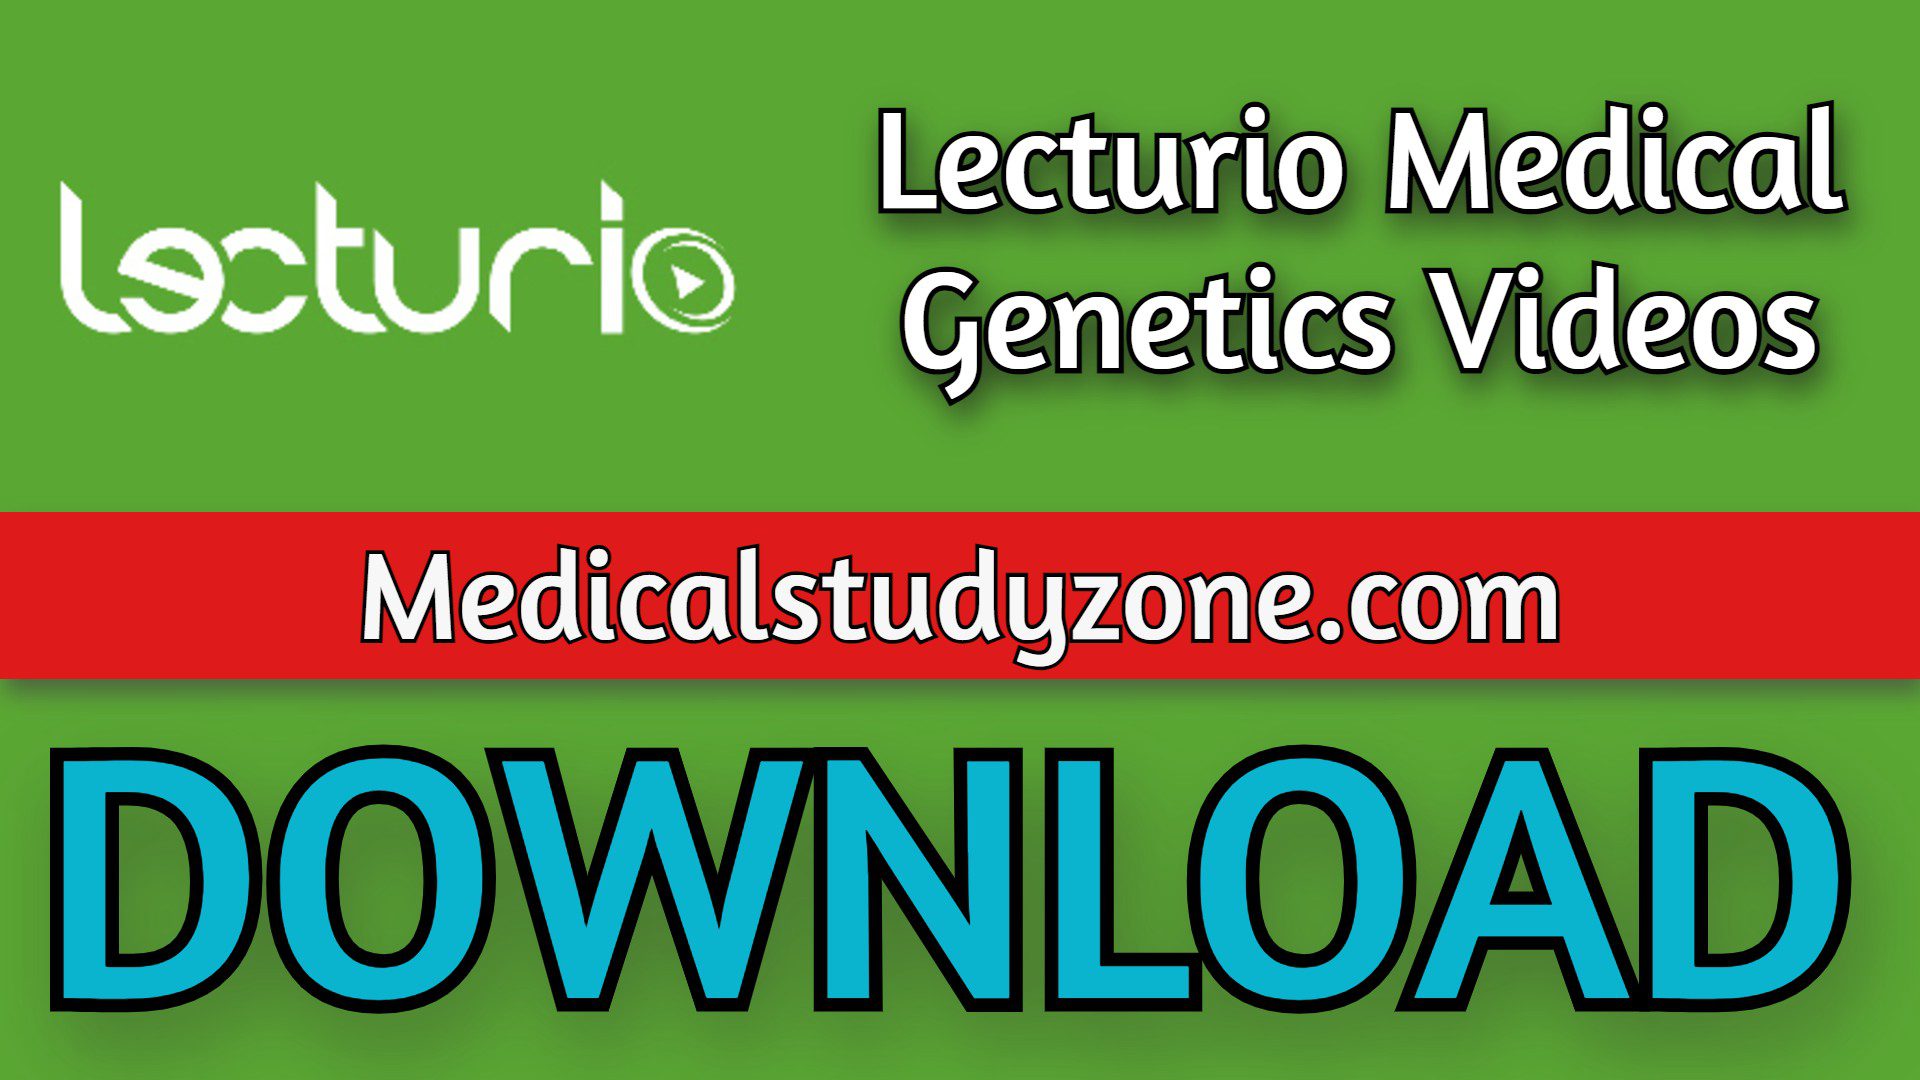 Lecturio Medical Genetics Videos 2021 Free Download